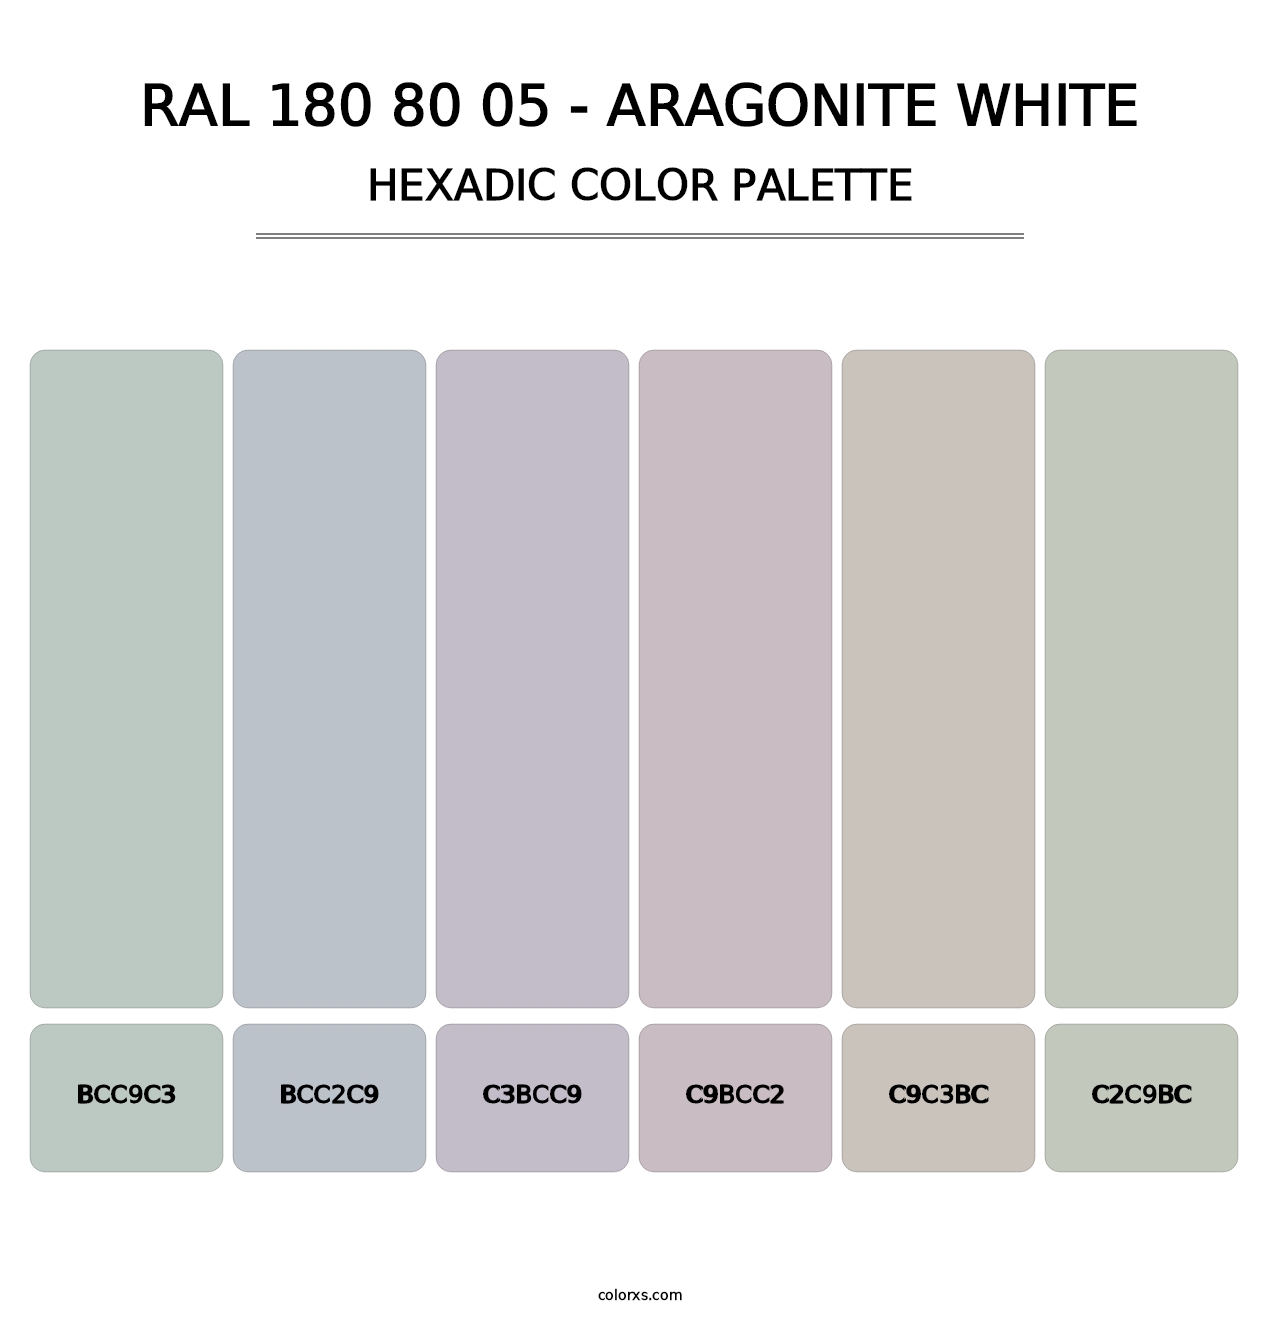 RAL 180 80 05 - Aragonite White - Hexadic Color Palette